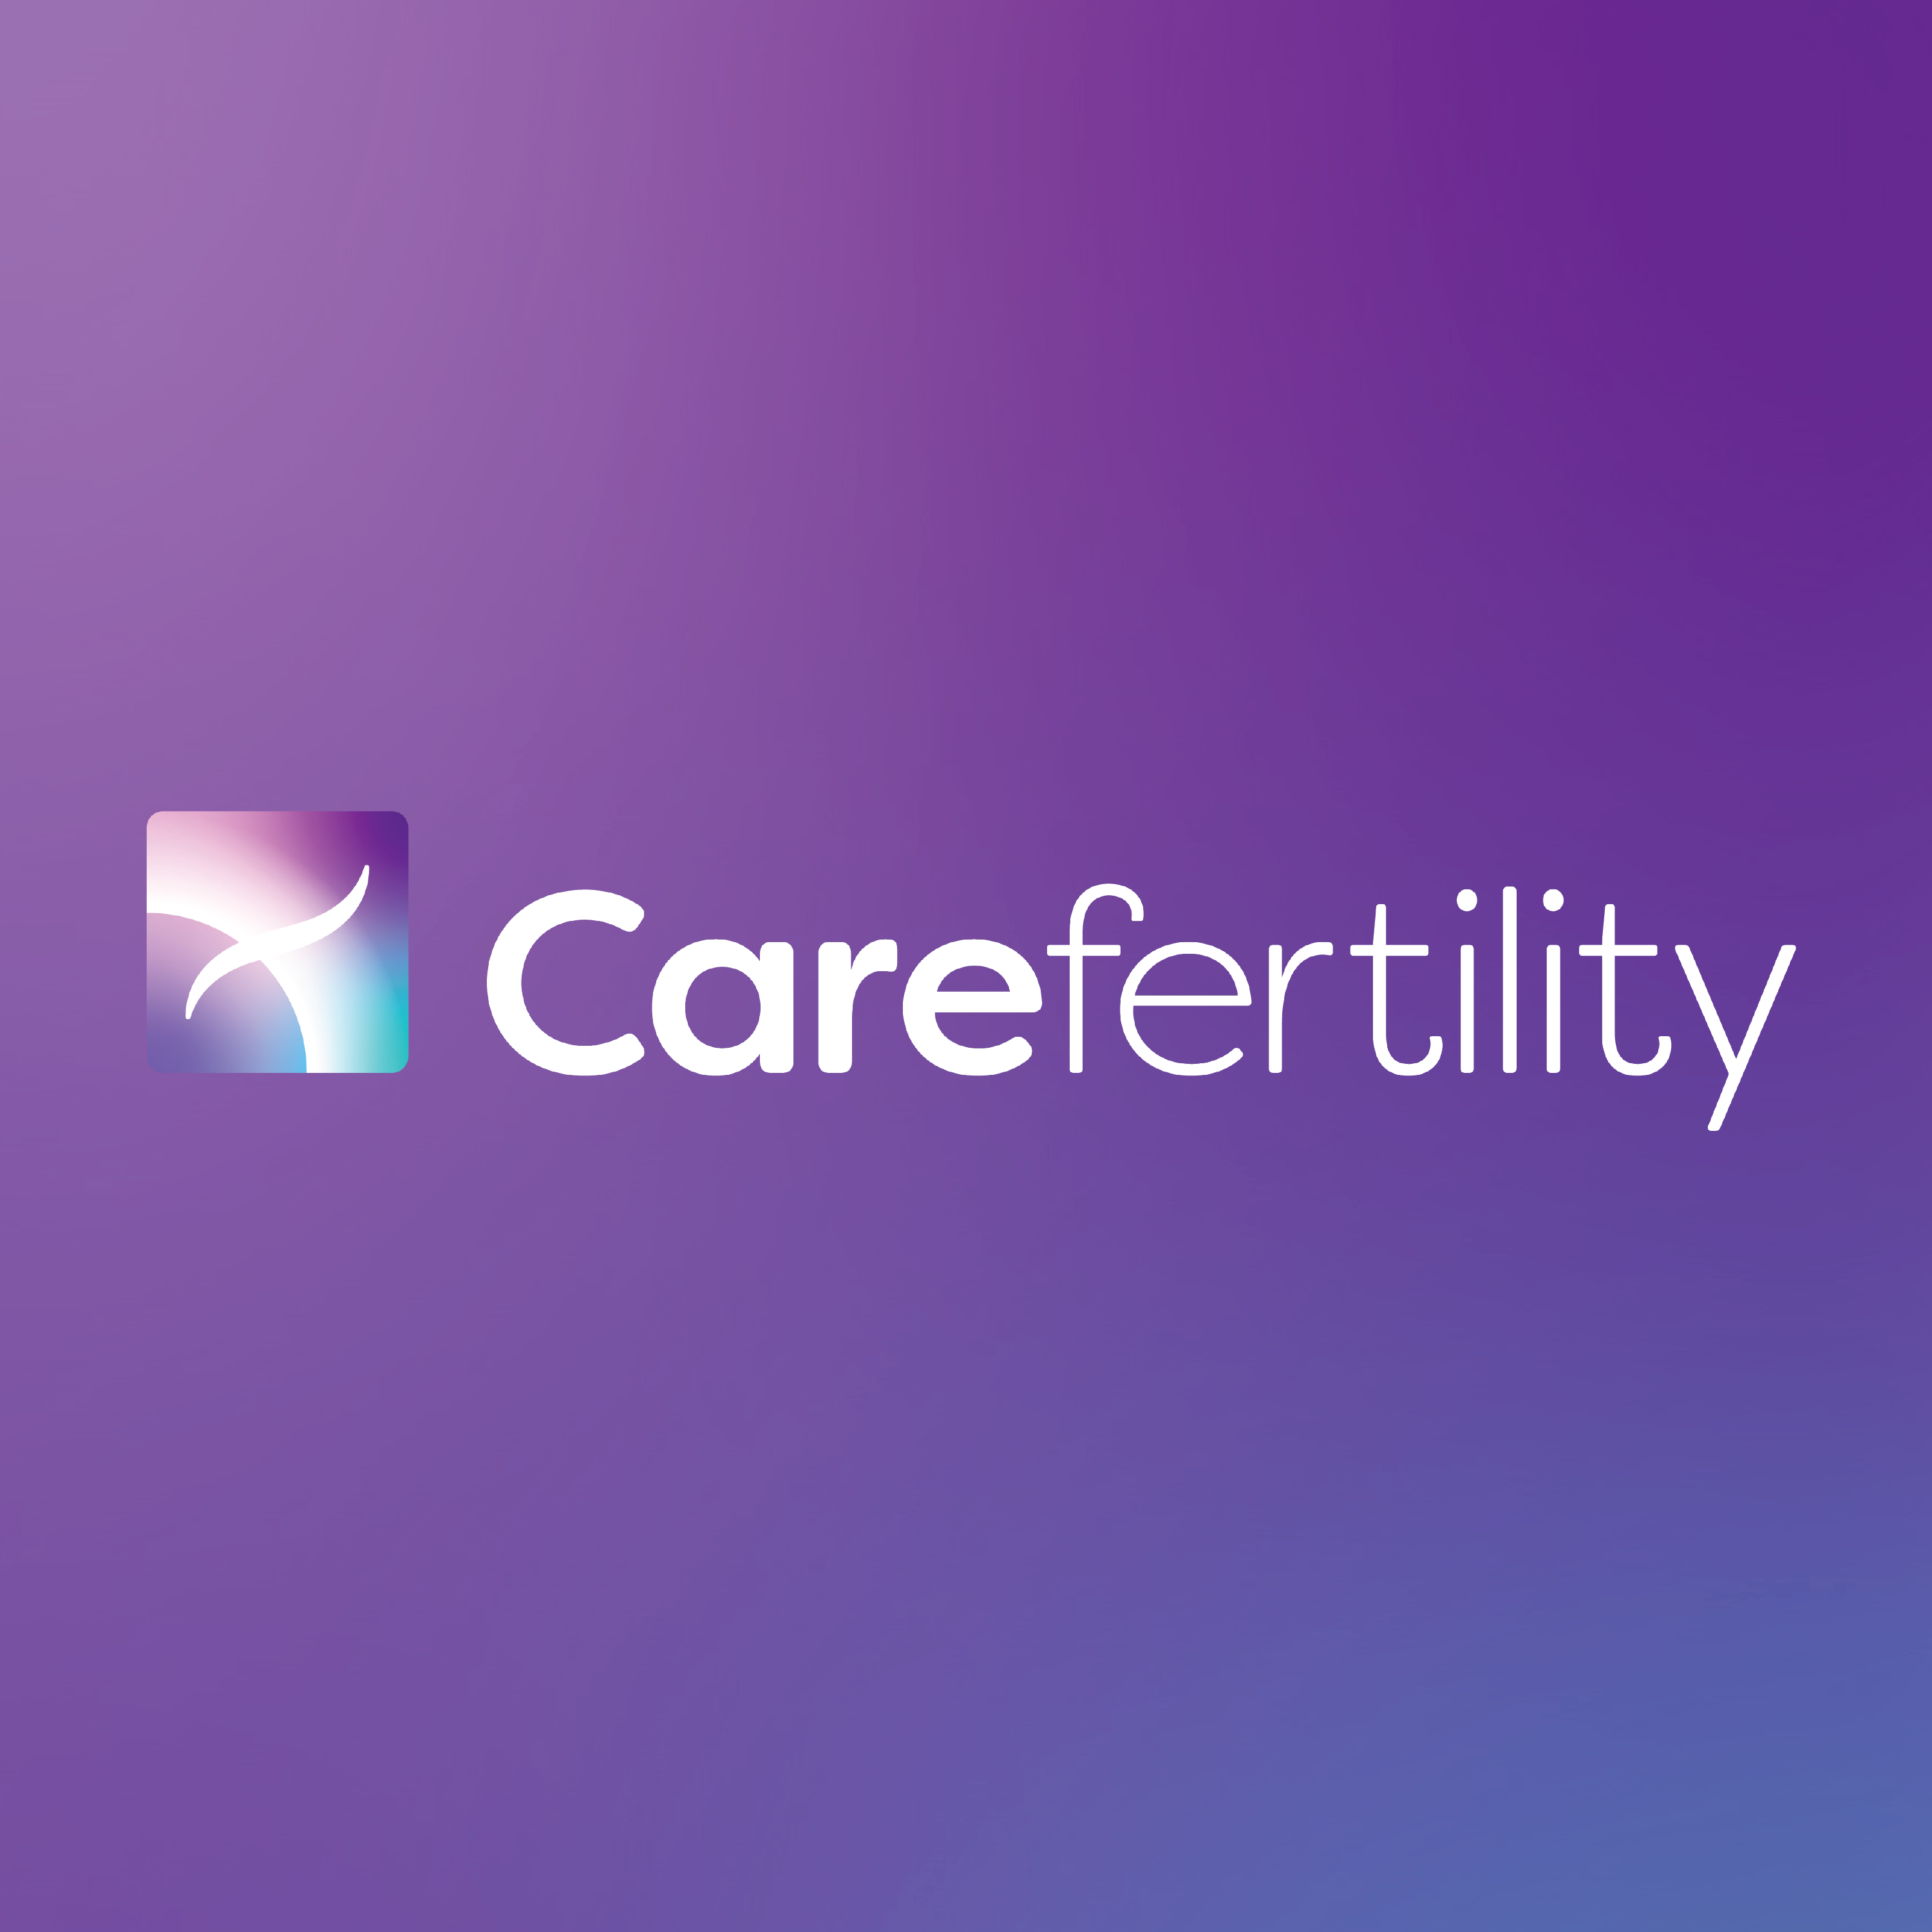 Care Fertility - Leeds, West Yorkshire LS14 6UH - 01135 216800 | ShowMeLocal.com